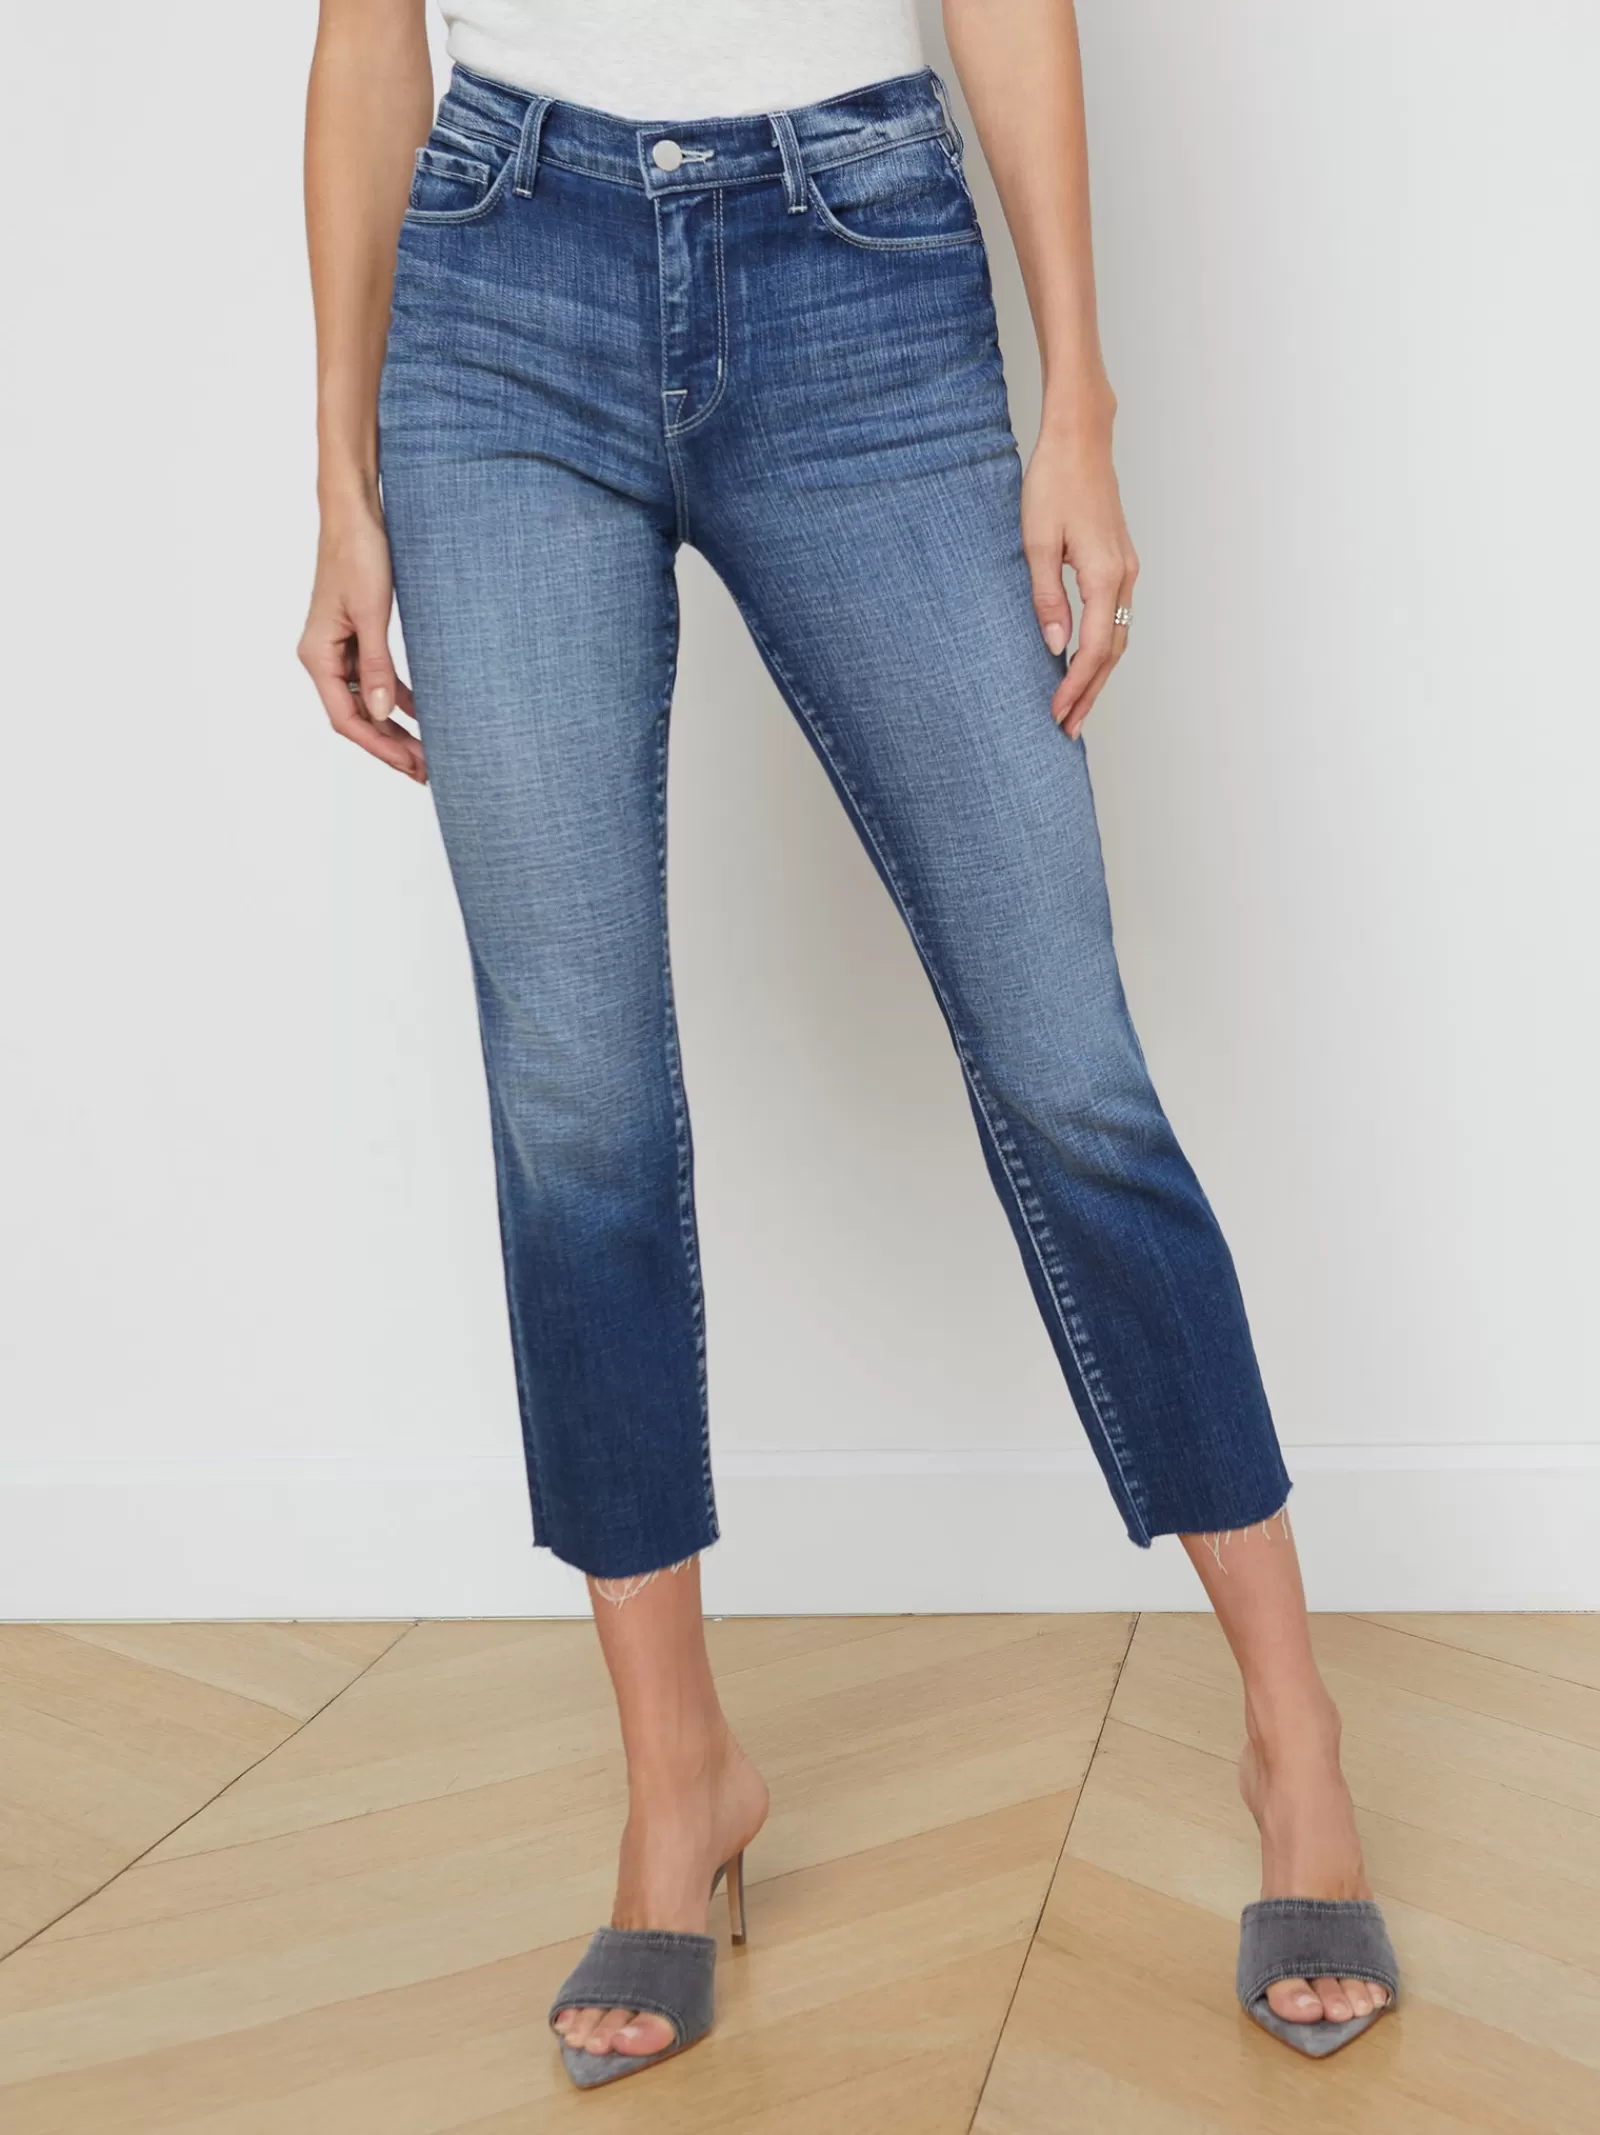 L'AGENCE Sada Slim-Leg Cropped Jean< Resort Collection | Petite